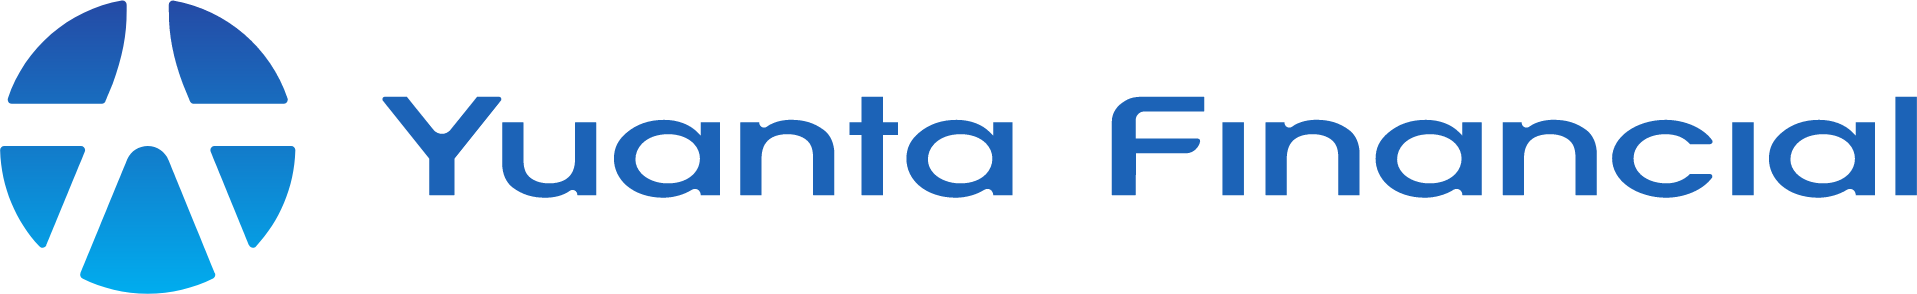 Yuanta Financial Holding logo large (transparent PNG)